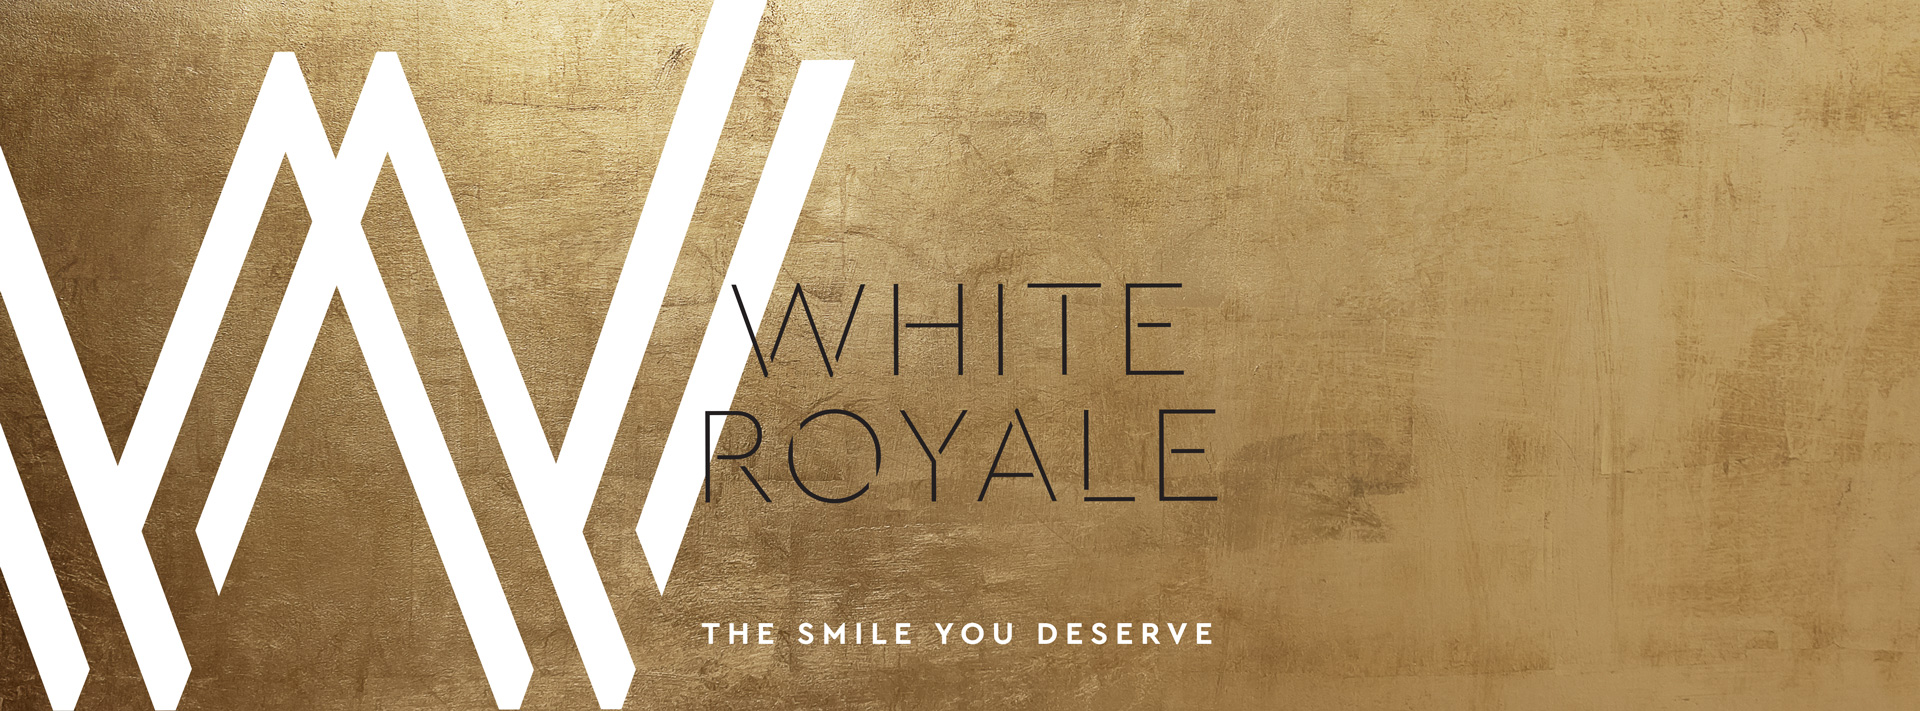 White Royale